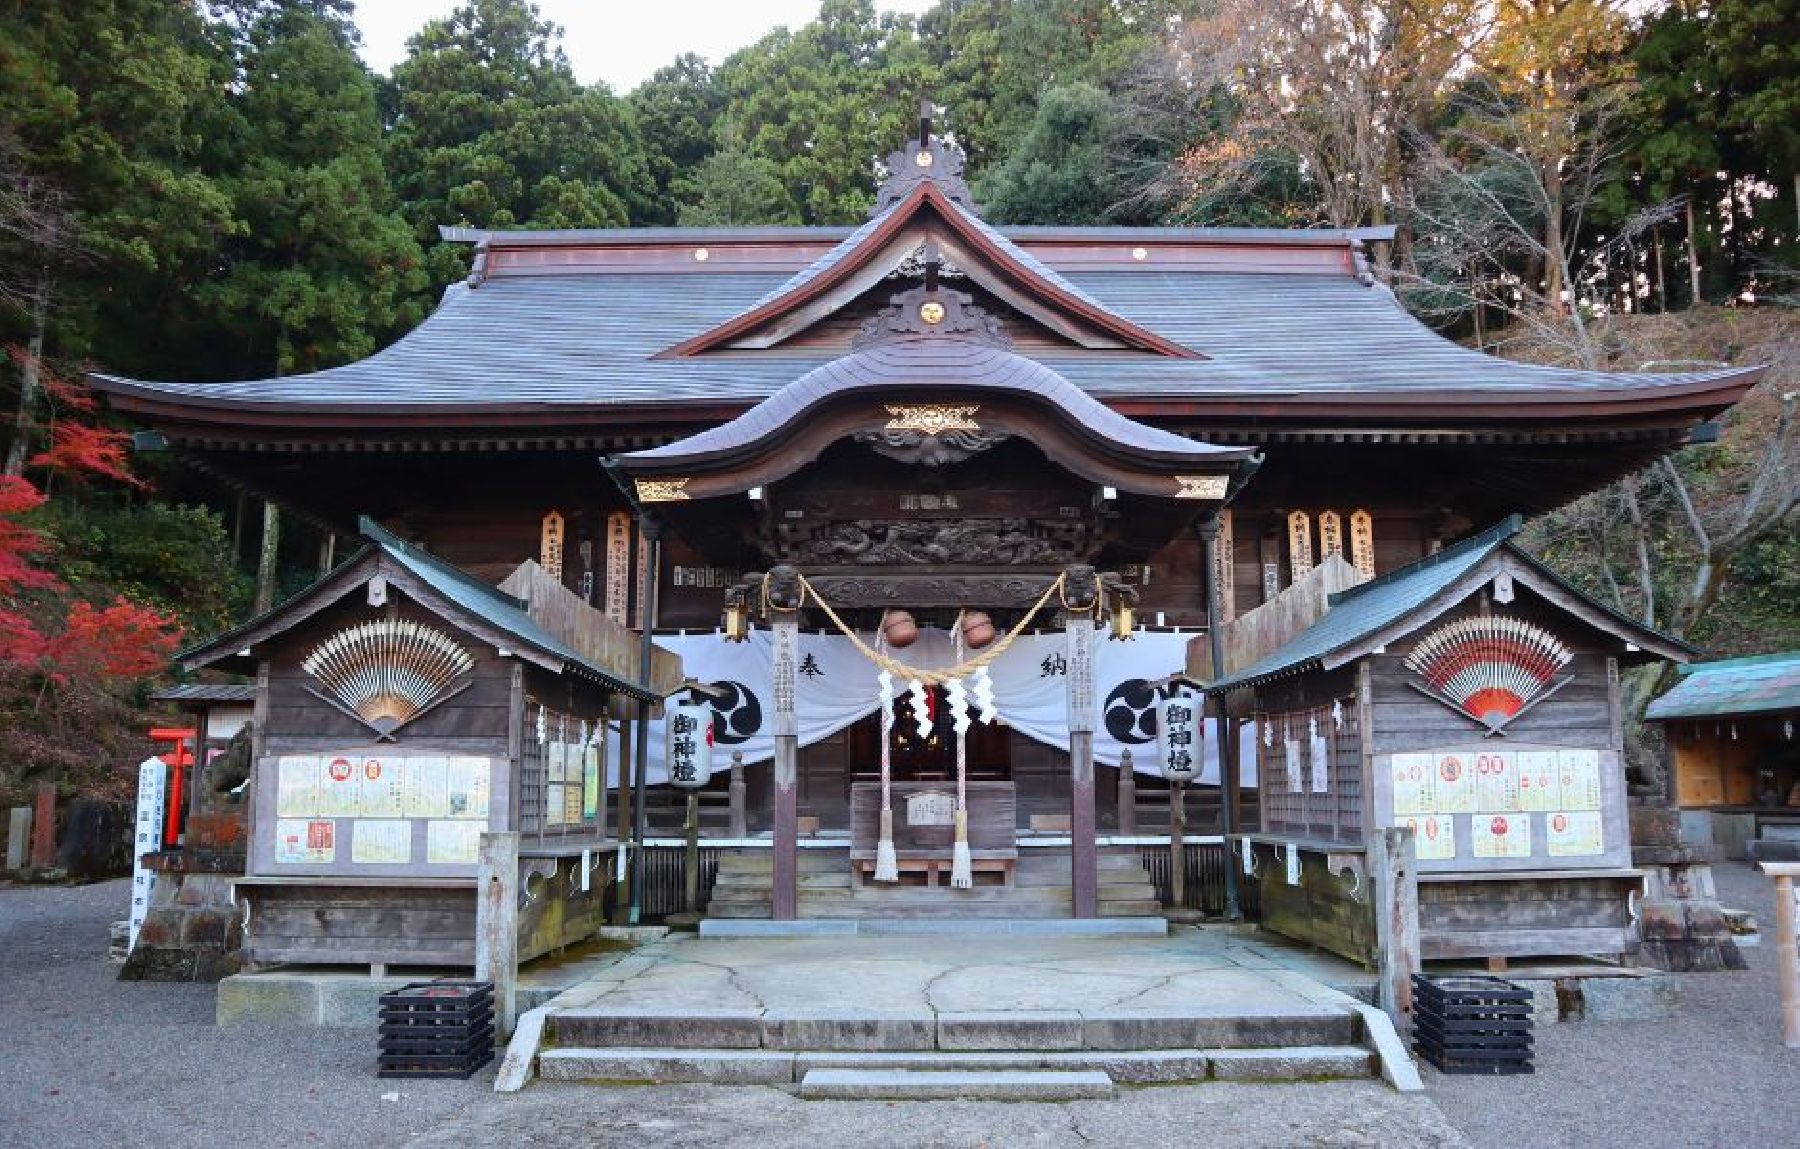 Iwaki Yumoto Onsen Shrine